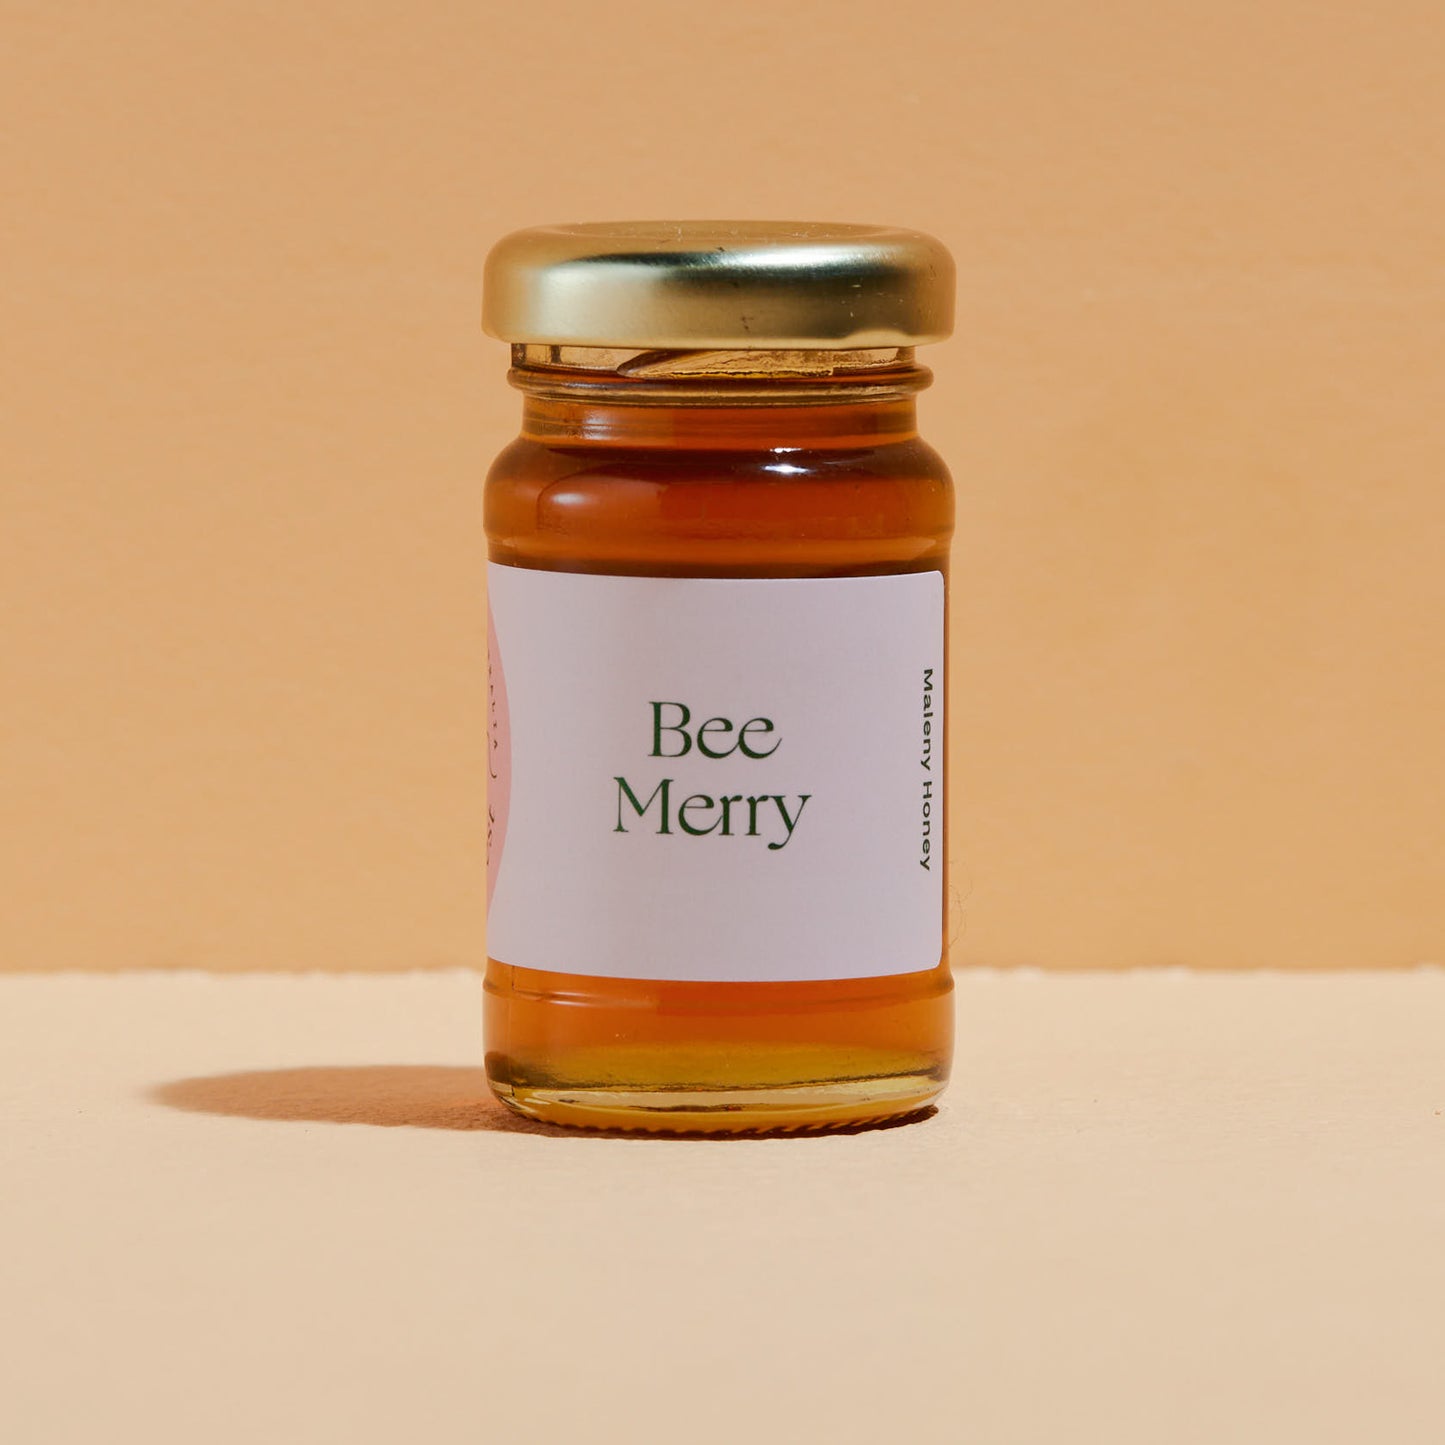 Maleny Honey Petite "Bee Merry"